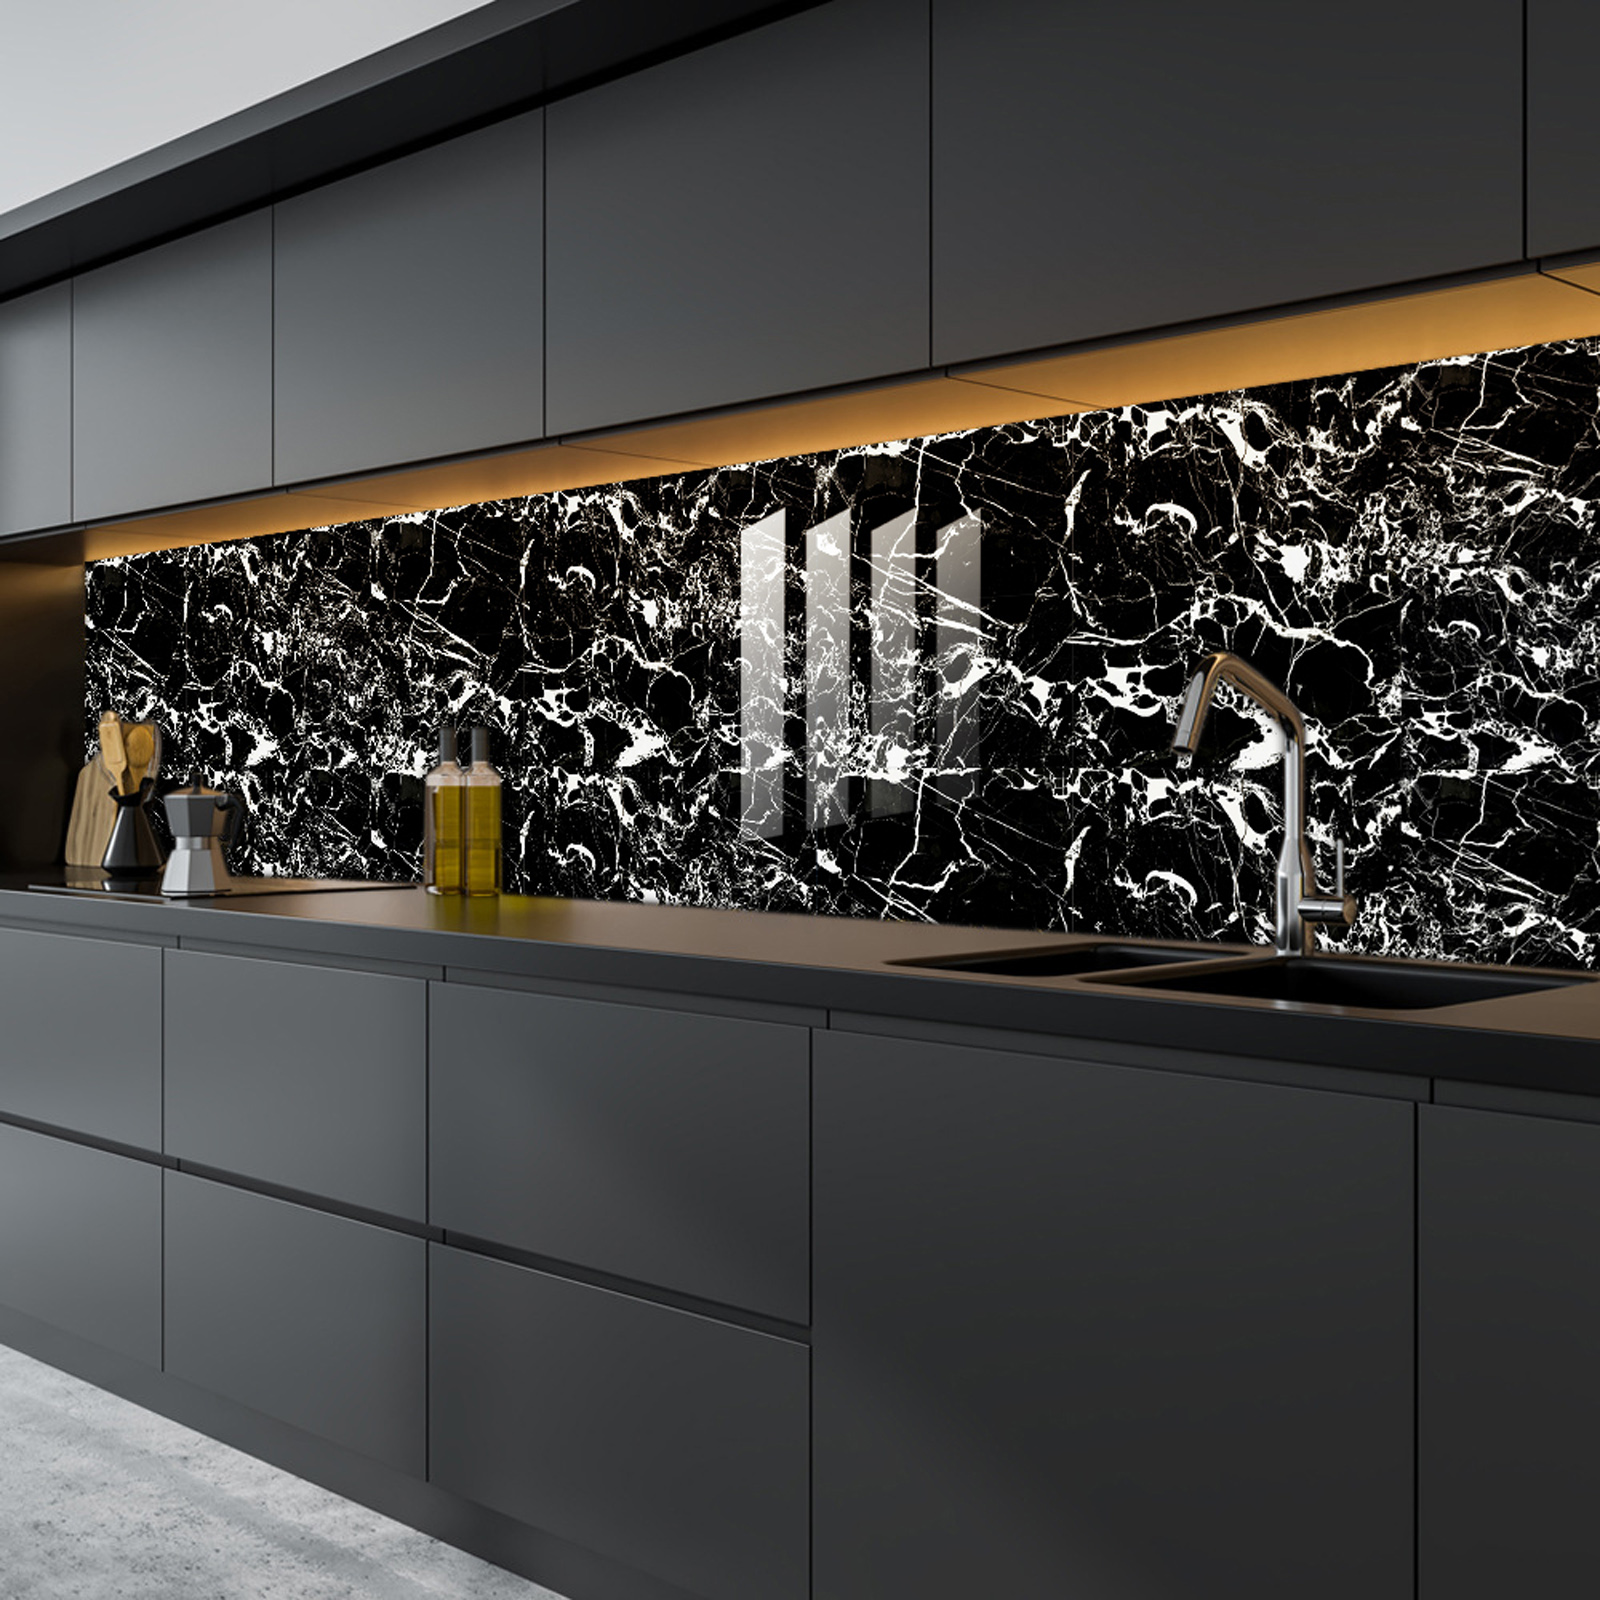 10pcs Black Gold Marble Brick Self-adhesive Bath Kitchen Wall